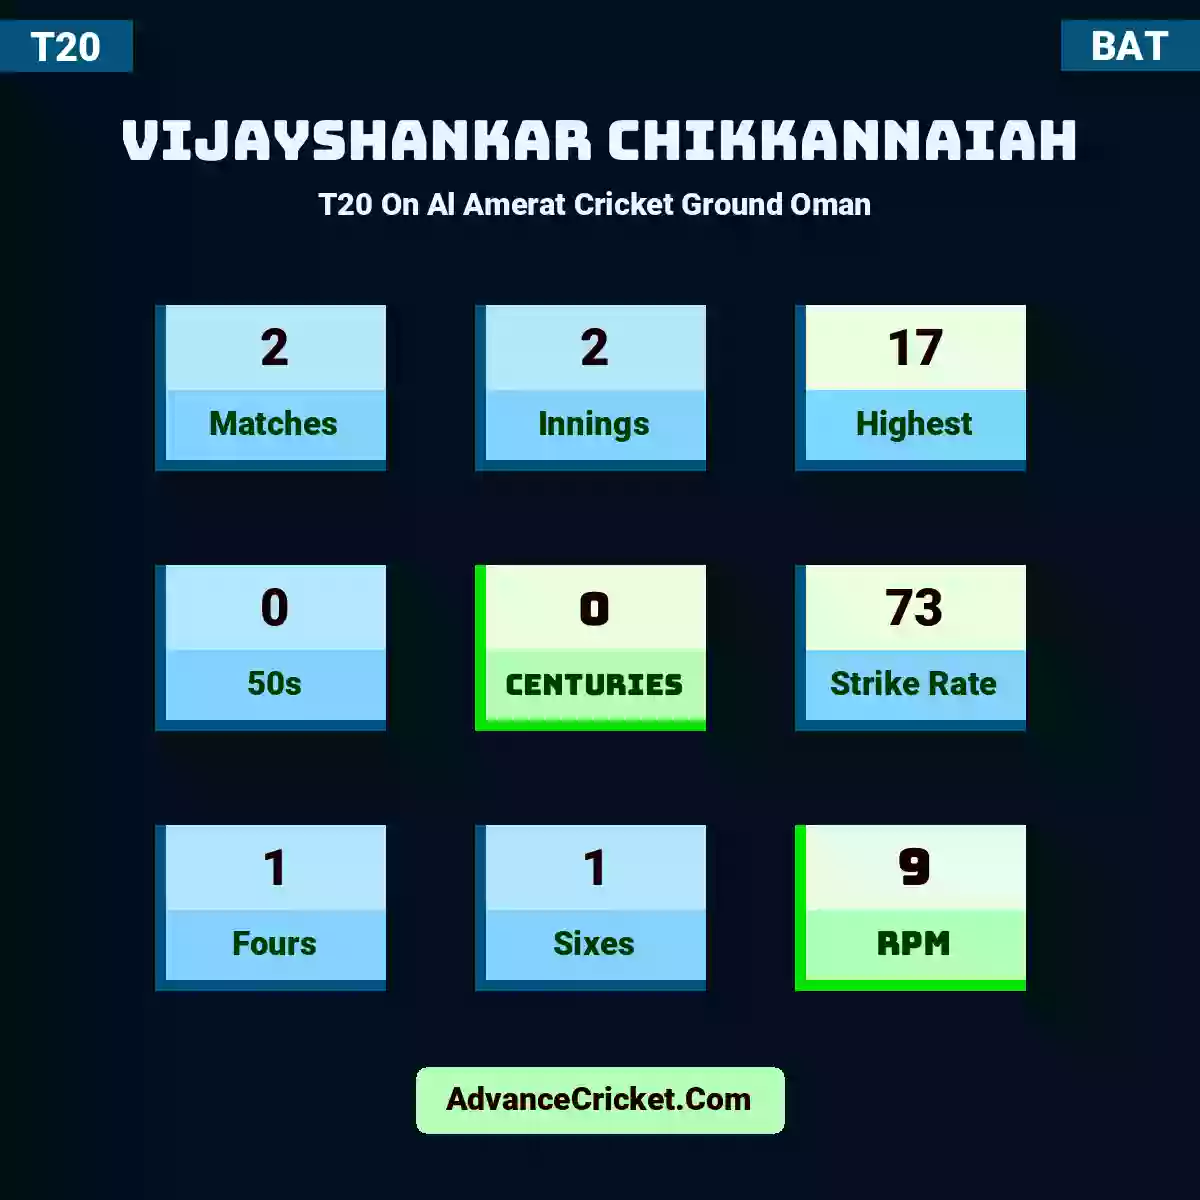 Vijayshankar Chikkannaiah T20  On Al Amerat Cricket Ground Oman , Vijayshankar Chikkannaiah played 1 matches, scored 50 runs as highest, 1 half-centuries, and 0 centuries, with a strike rate of 116. V.Chikkannaiah hit 5 fours and 1 sixes, with an RPM of 50.